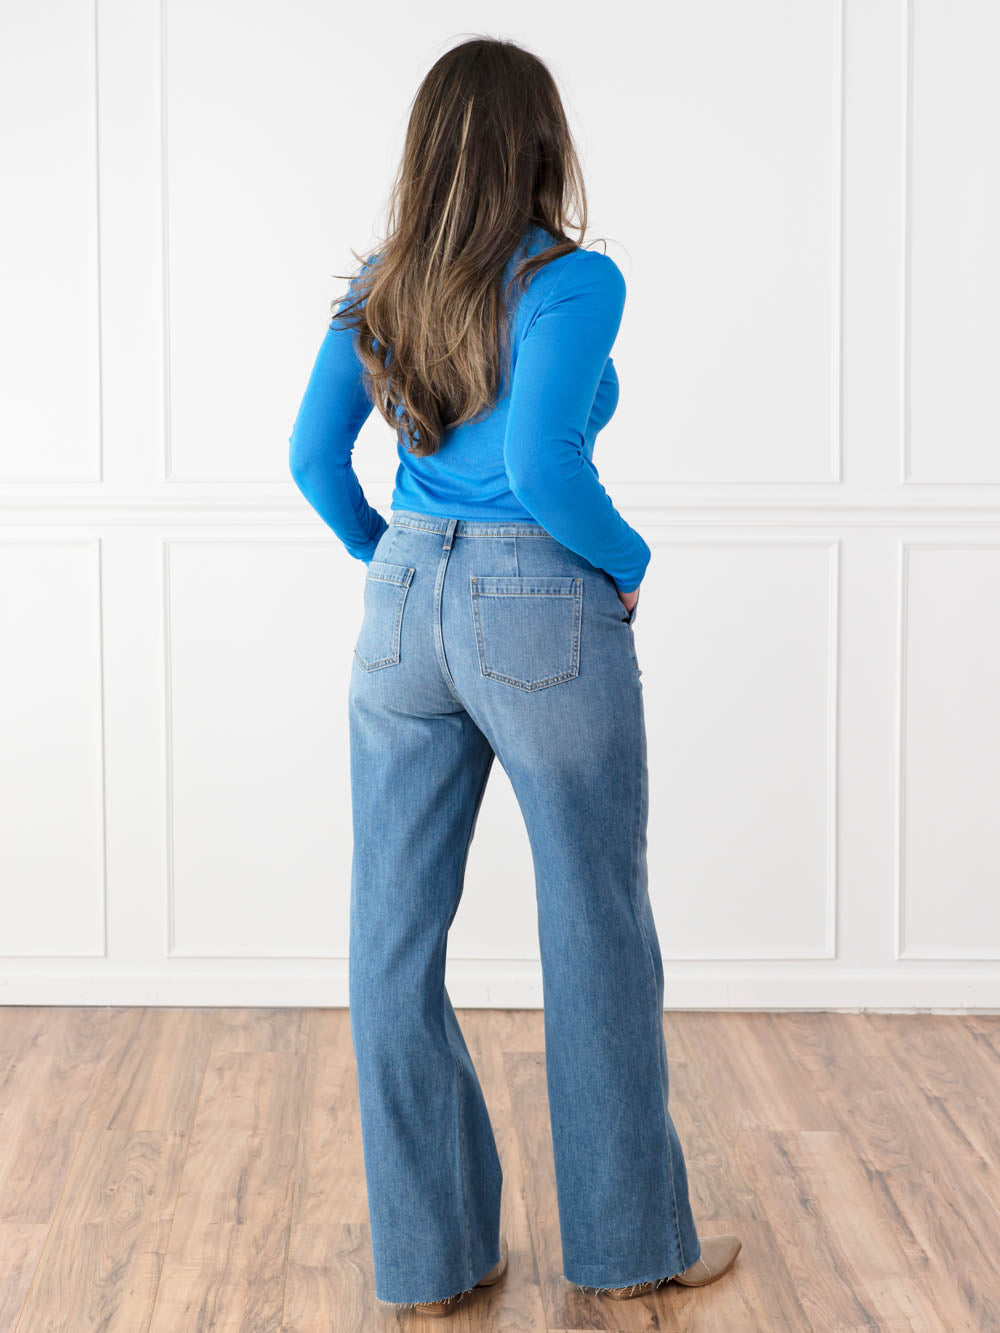 Best Fitting Wide Leg Jeans for Tall Women